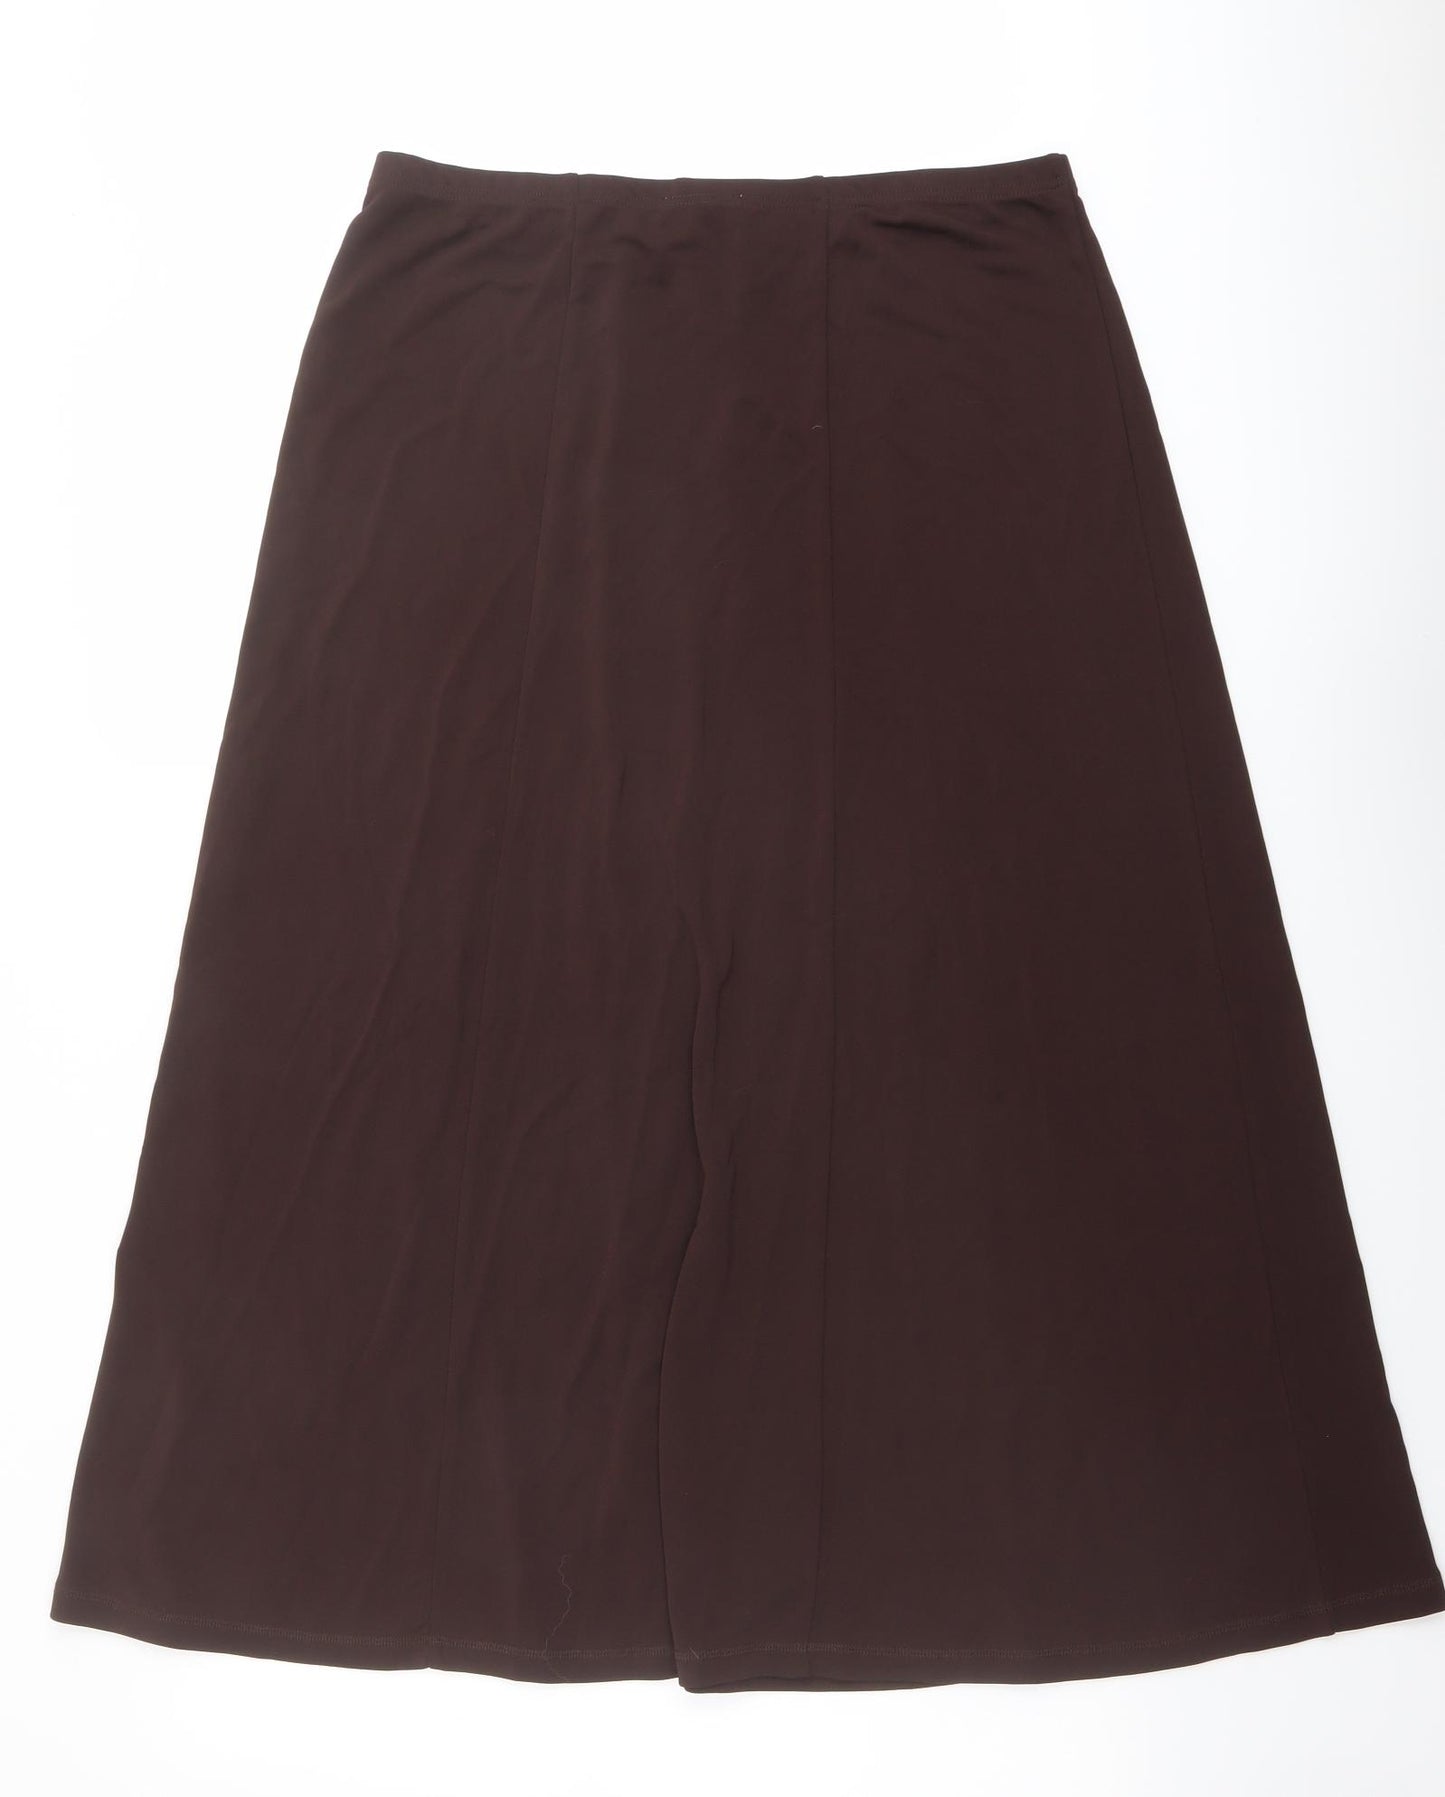 ELVI Womens Brown Viscose Swing Skirt Size 10